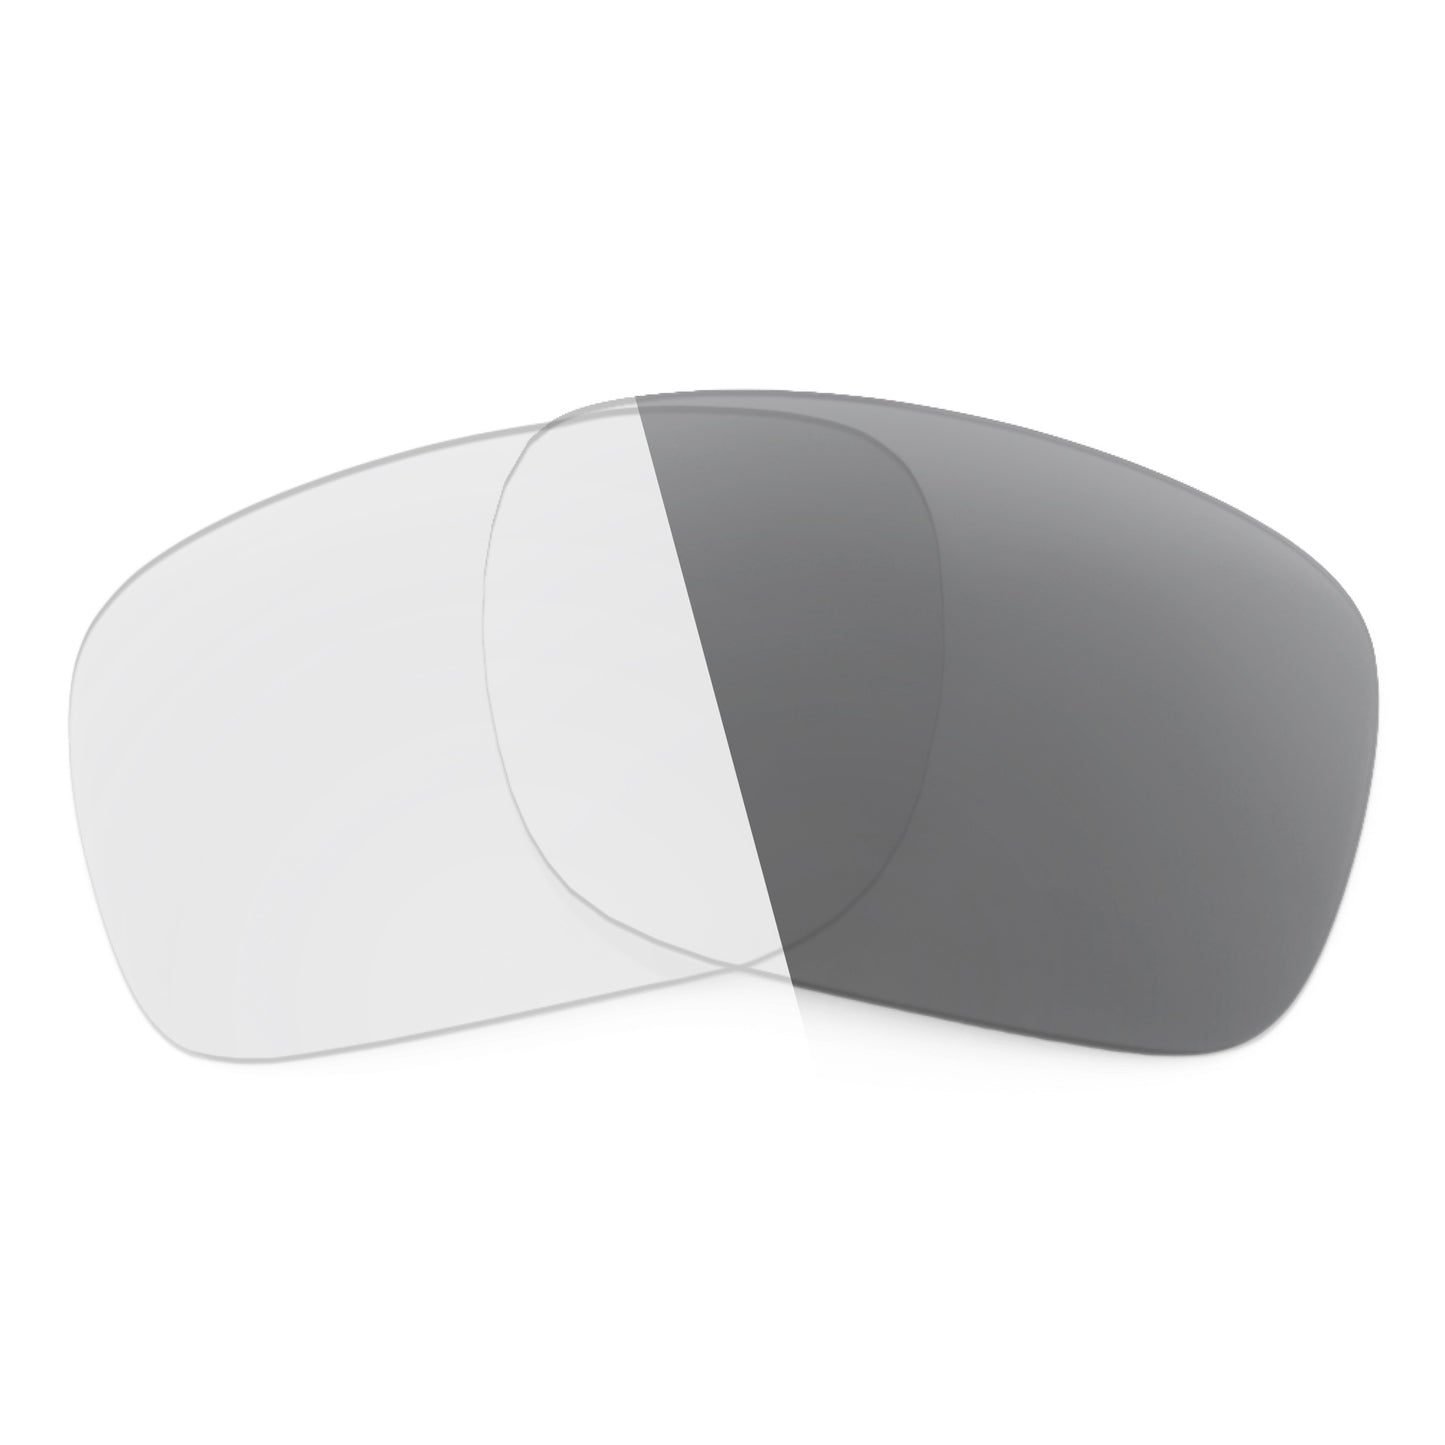 Revant replacement lenses for Prada SPR 510 Non-Polarized Adapt Gray Photochromic